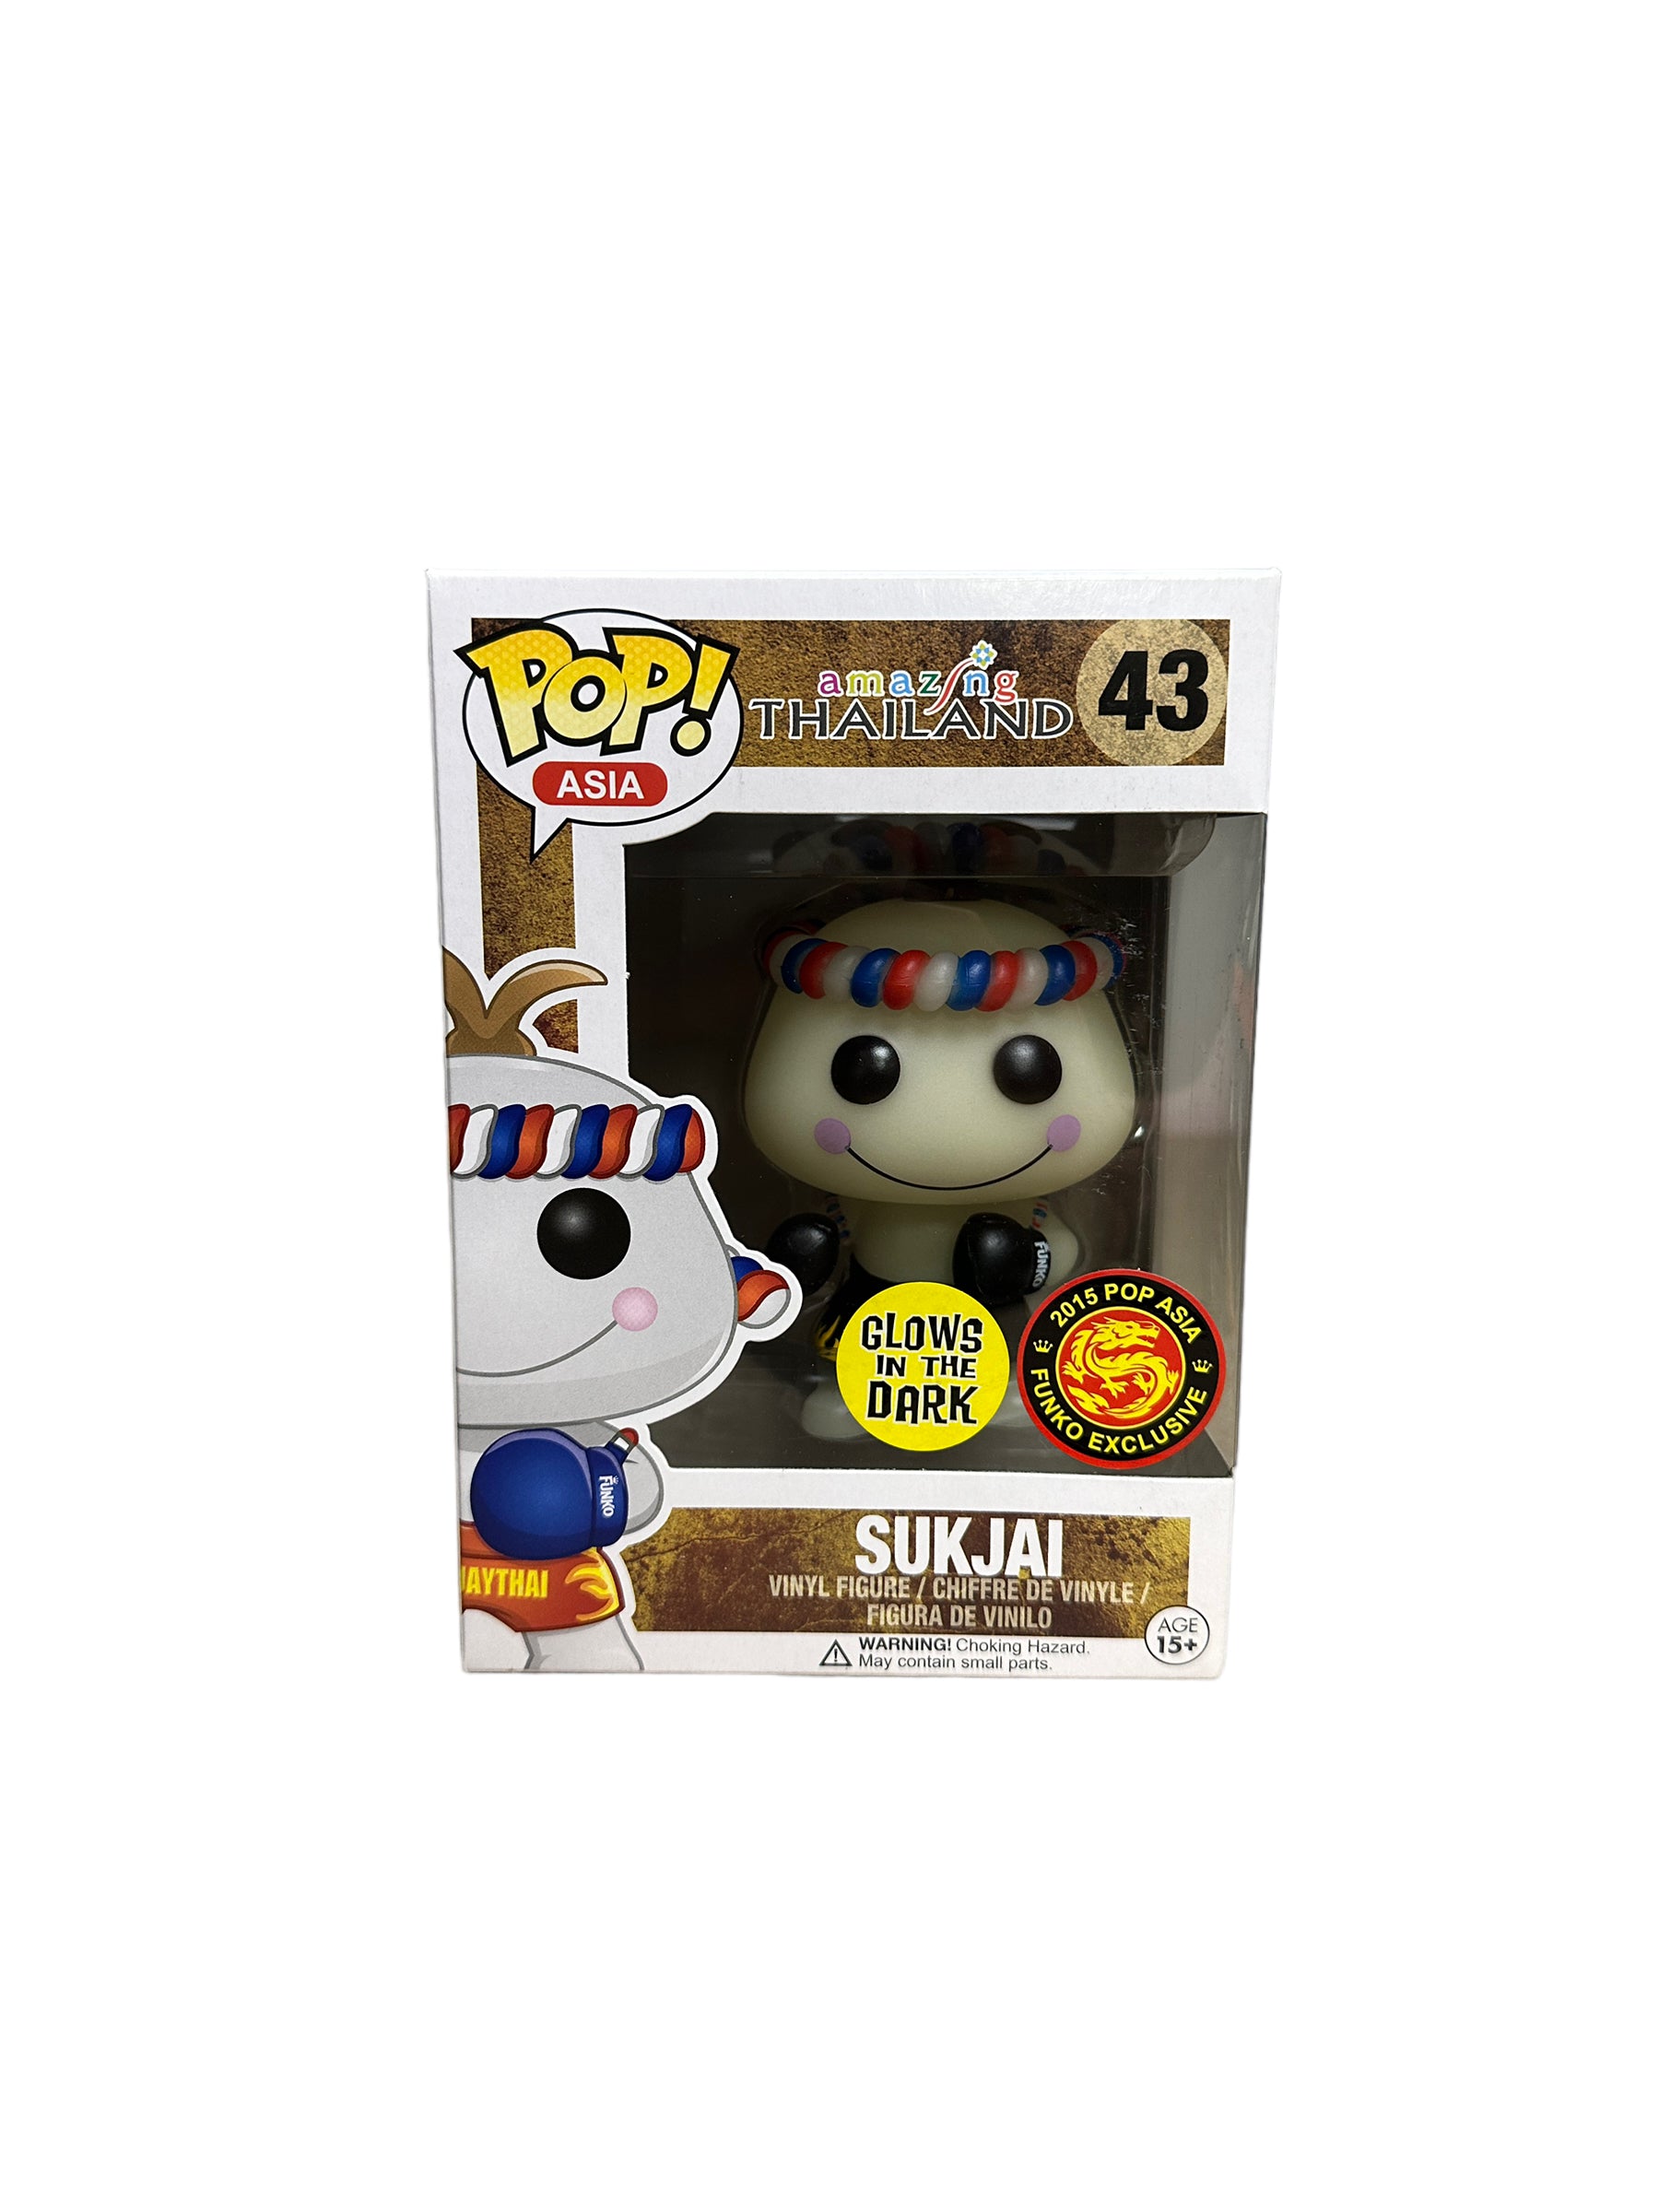 Sukjai #43 (Glows in the Dark) Funko Pop! - Amazing Thailand - Asia 2015 Exclusive - Condition 8.75/10